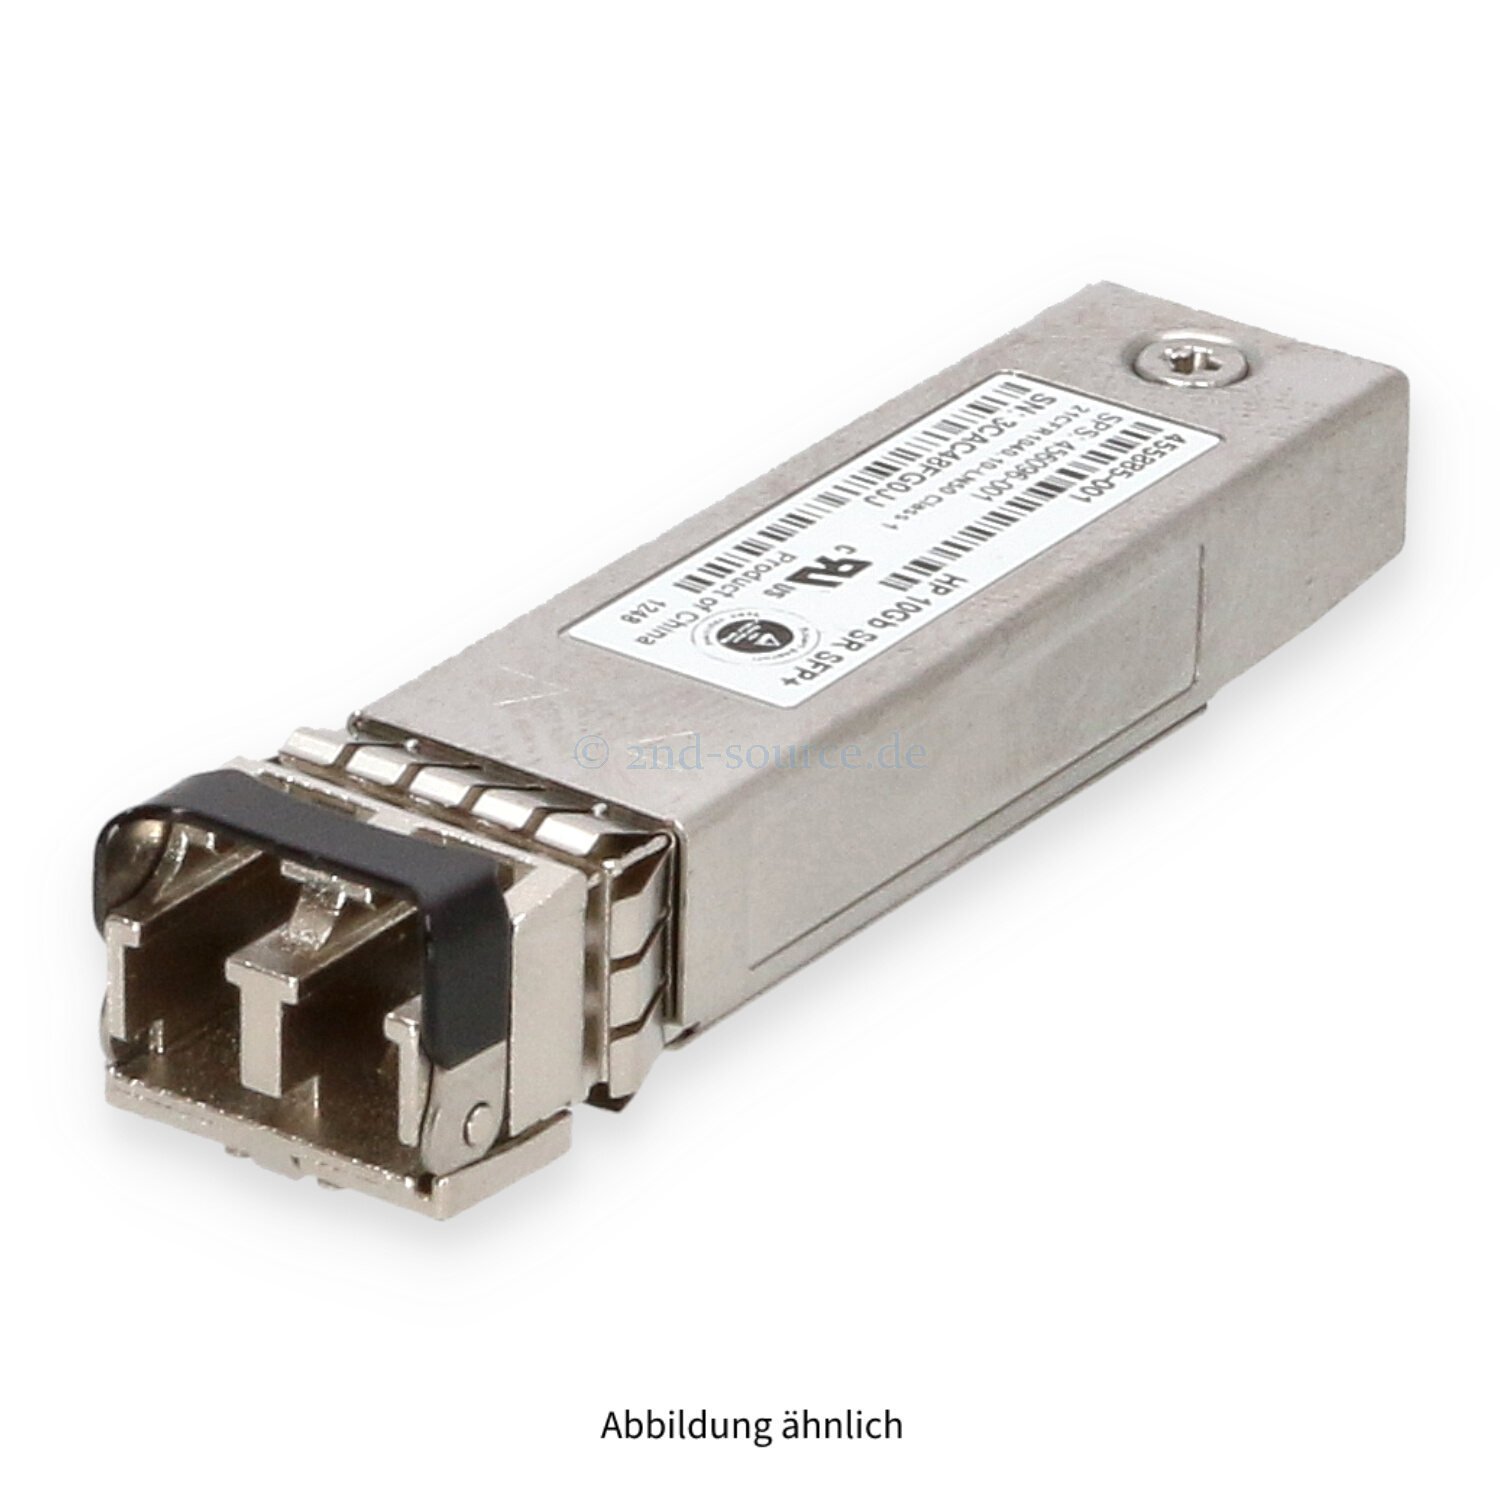 HPE 10GB Short Wave SFP+ Transceiver Module 455883-B21 456096-001 455885-001